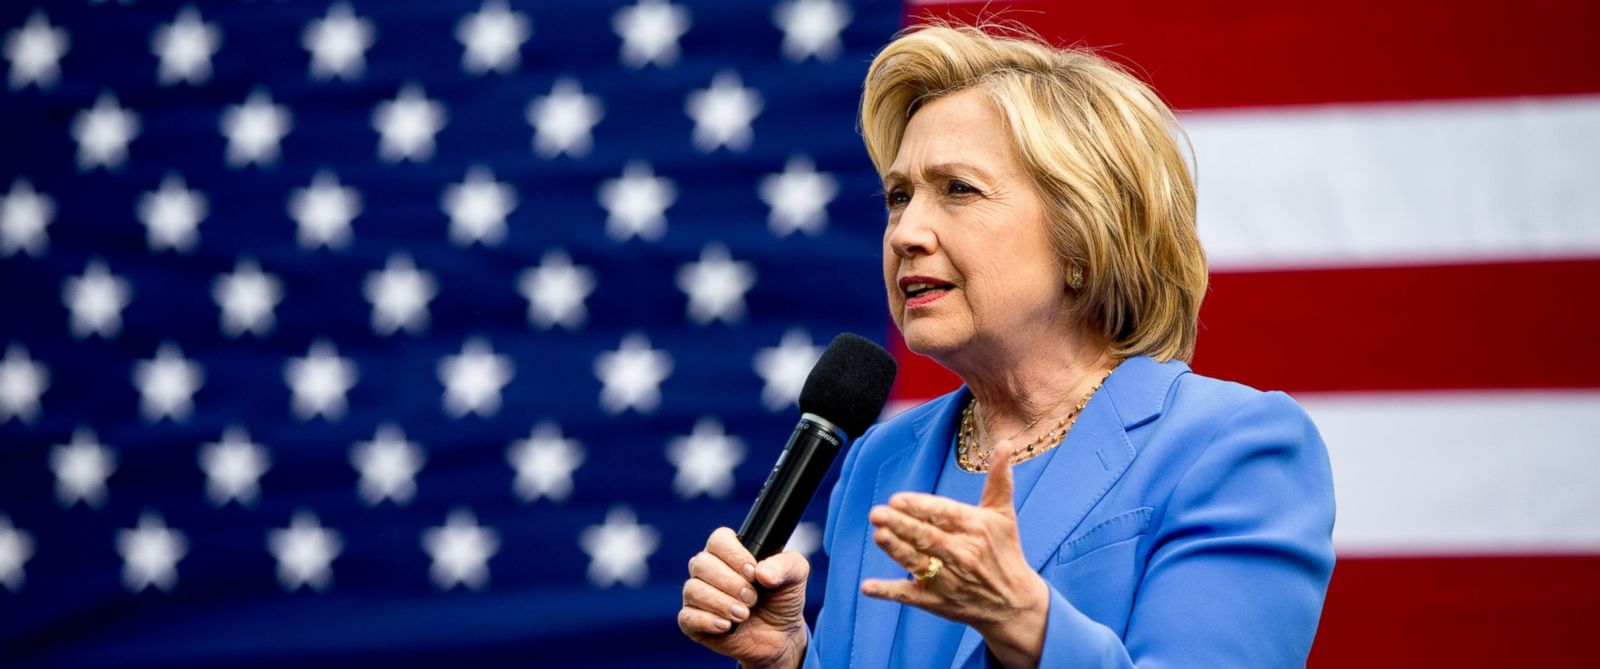 Hillary Clinton Has Enough Delegates to Clinch Democratic Nomination